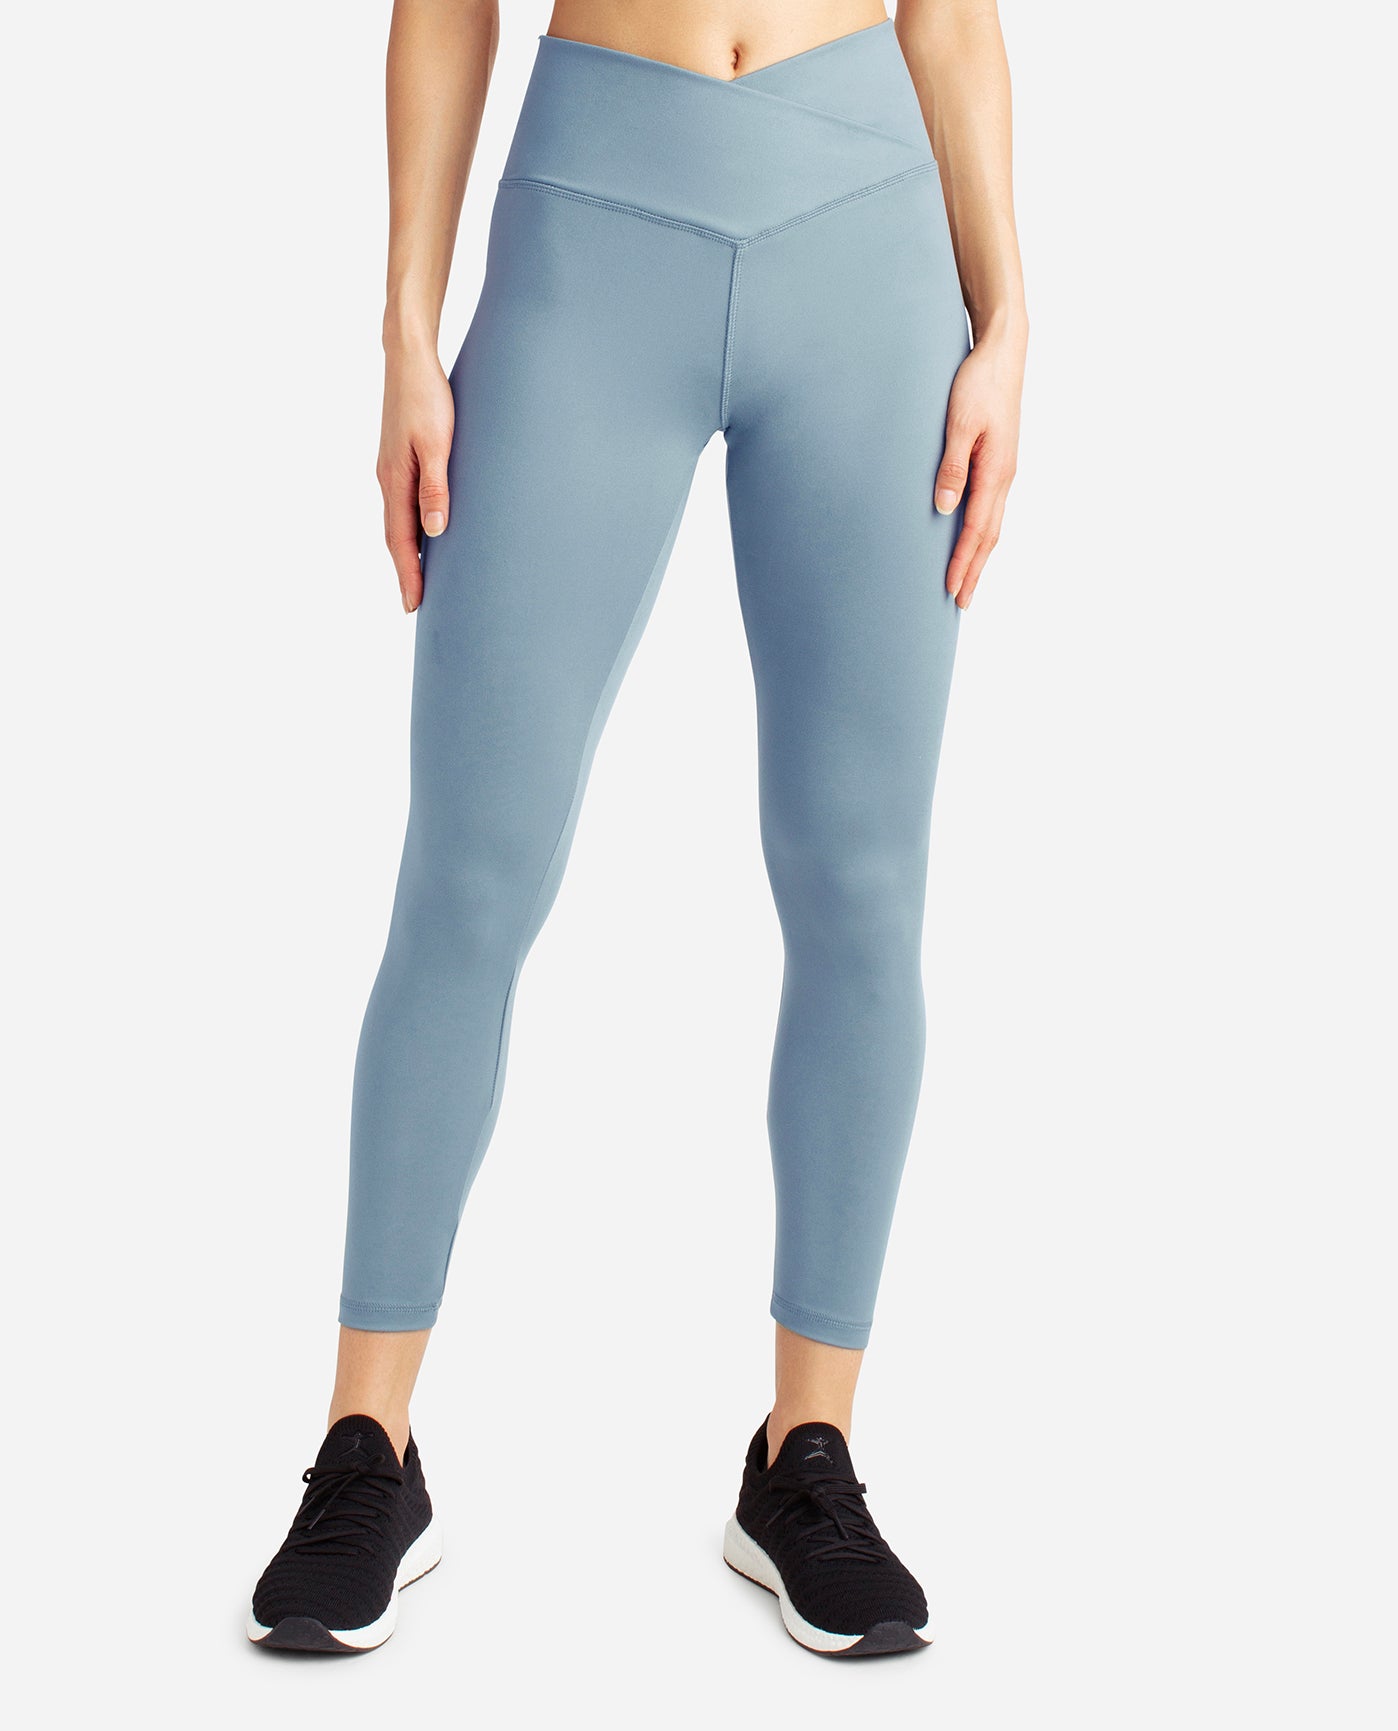 Danskin Now Womens Blue/Blue Athletic Skinny Fit Yoga Pants Size